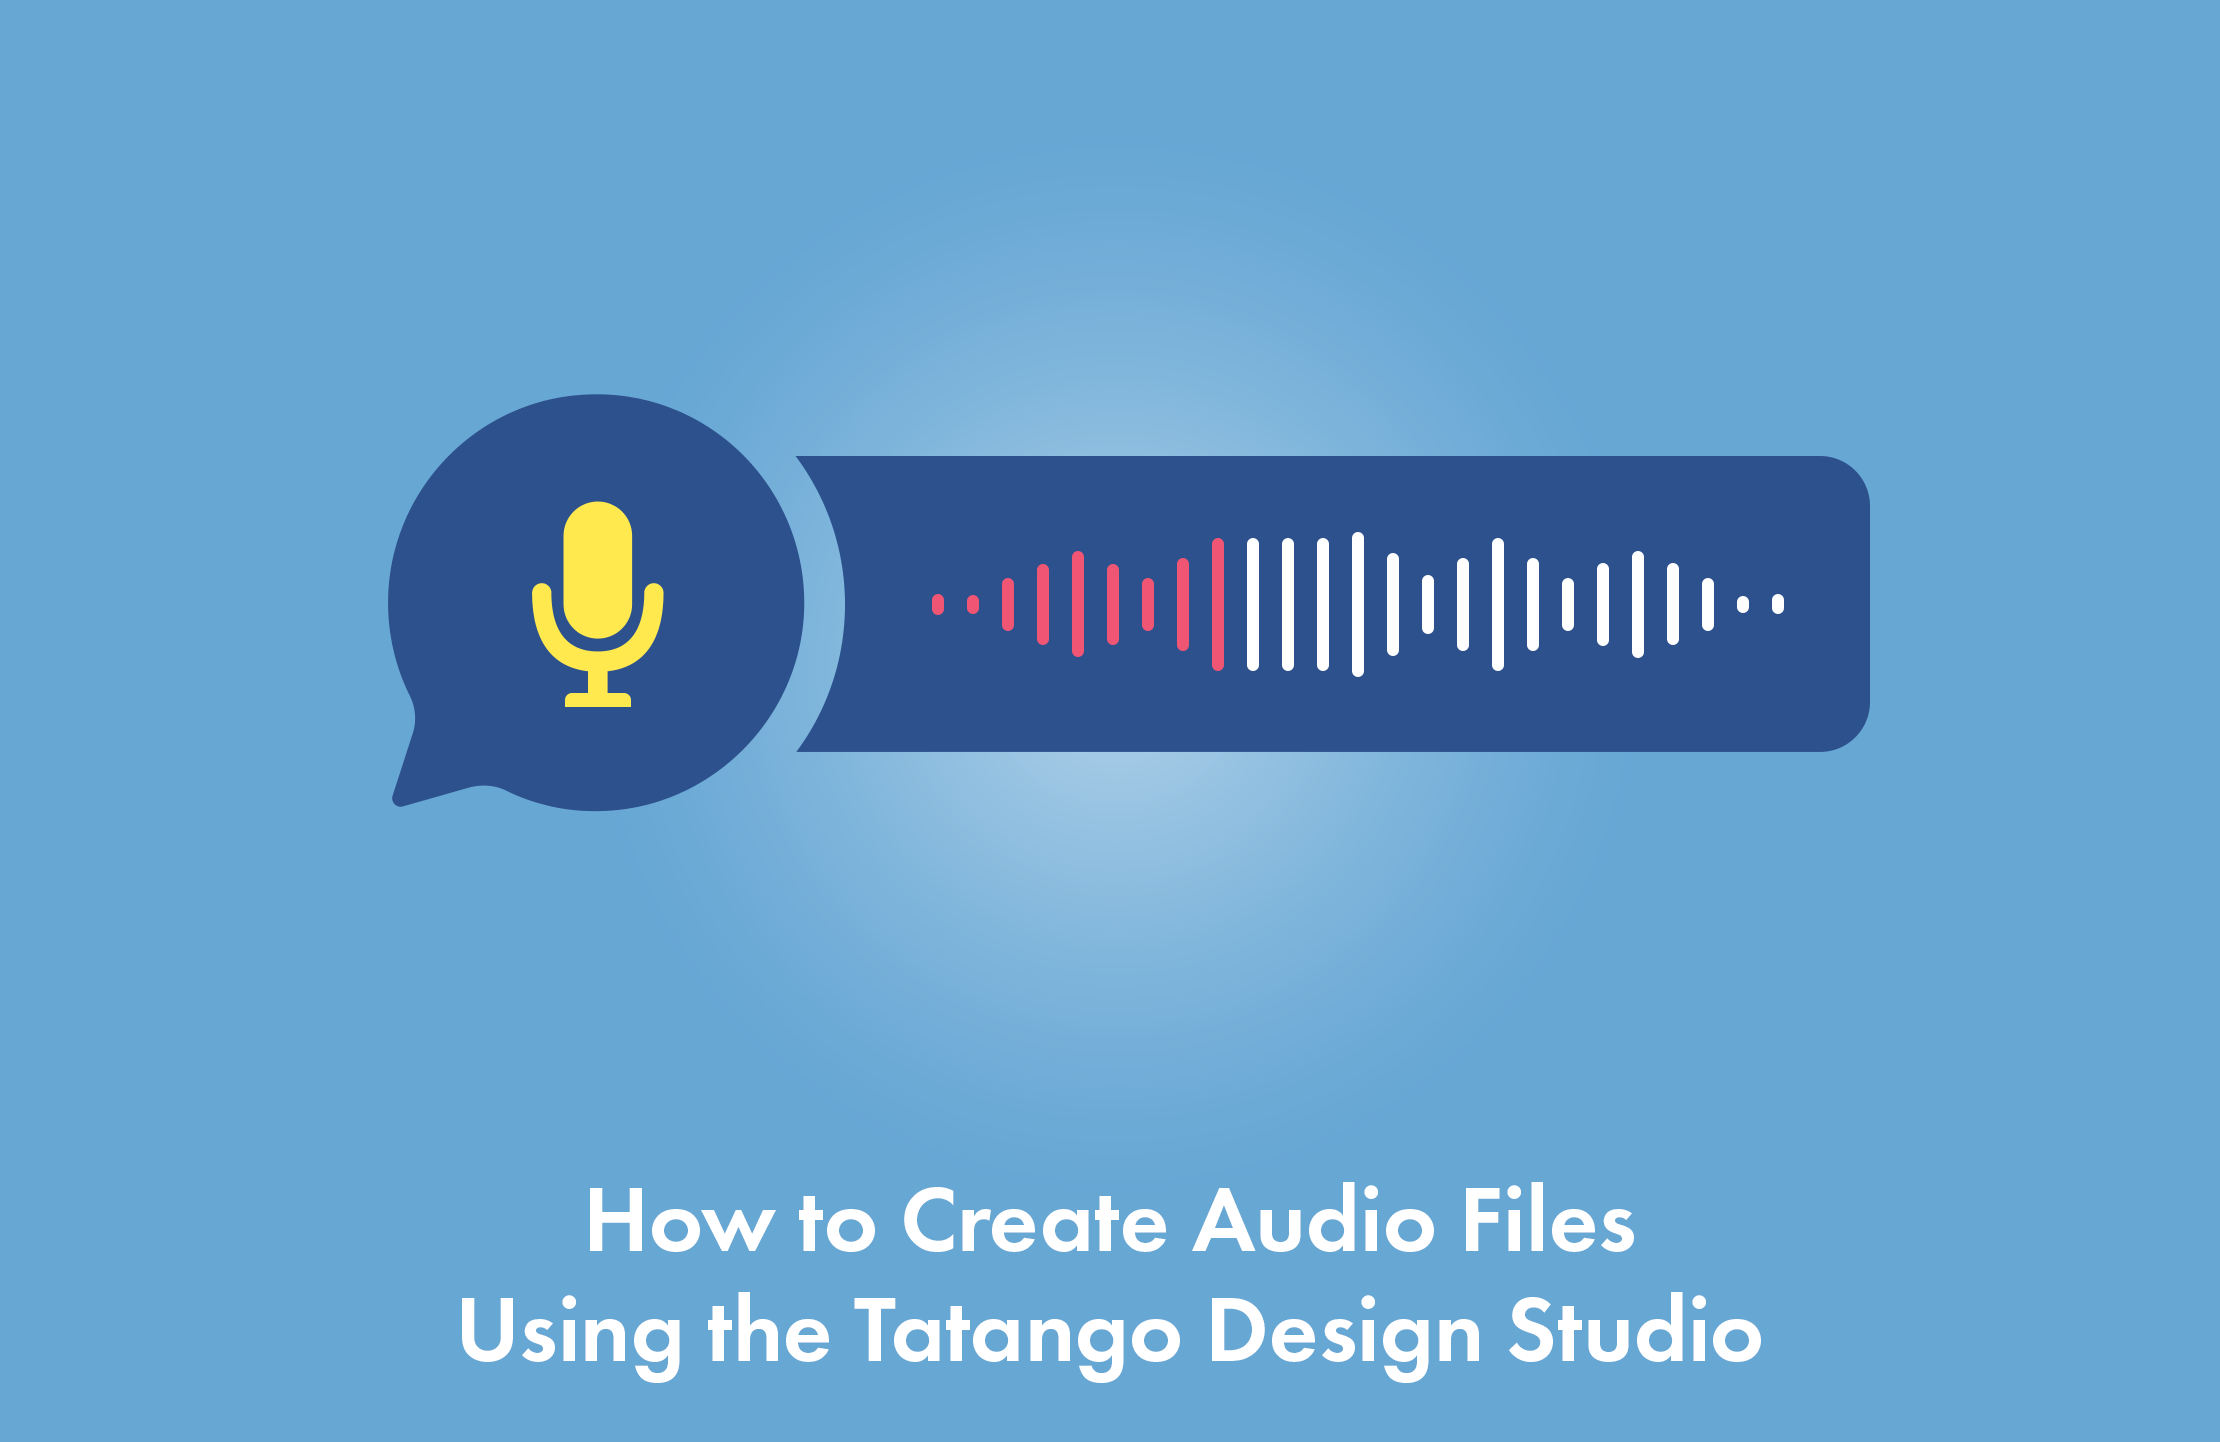 How to Create Audio Files Using the Tatango Design Studio